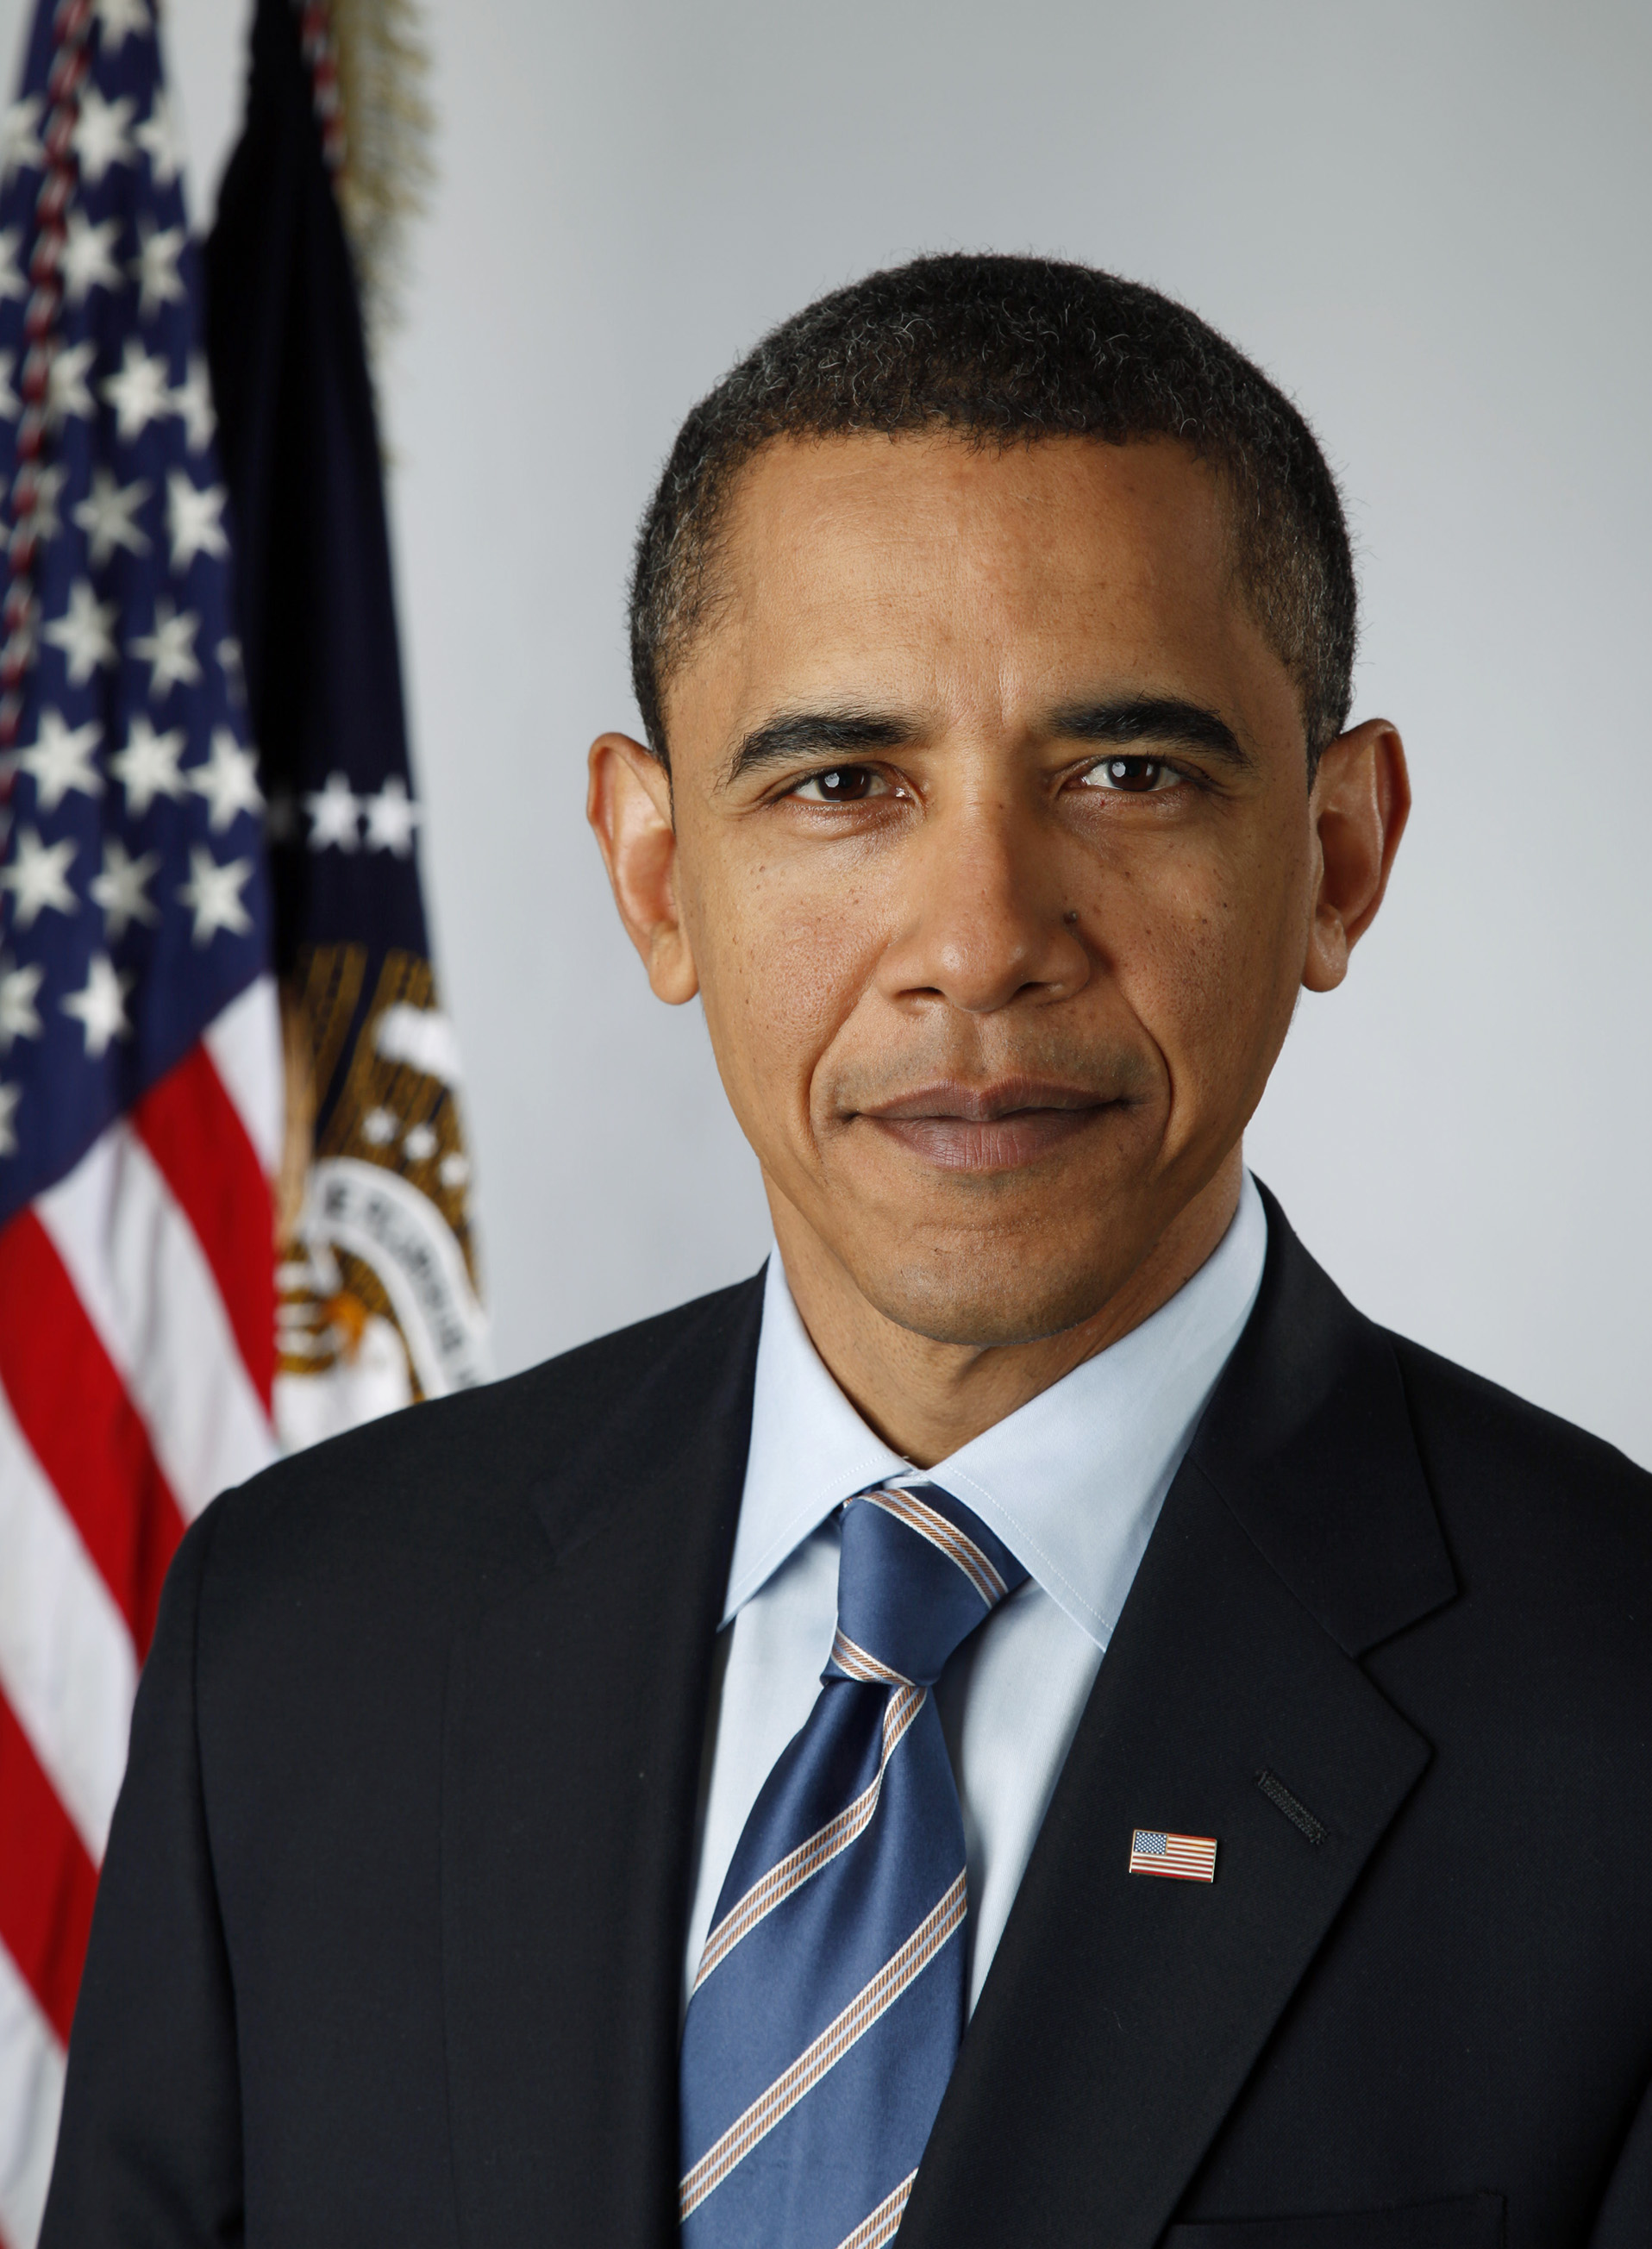 Barack Obama; from Wikimedia Commons